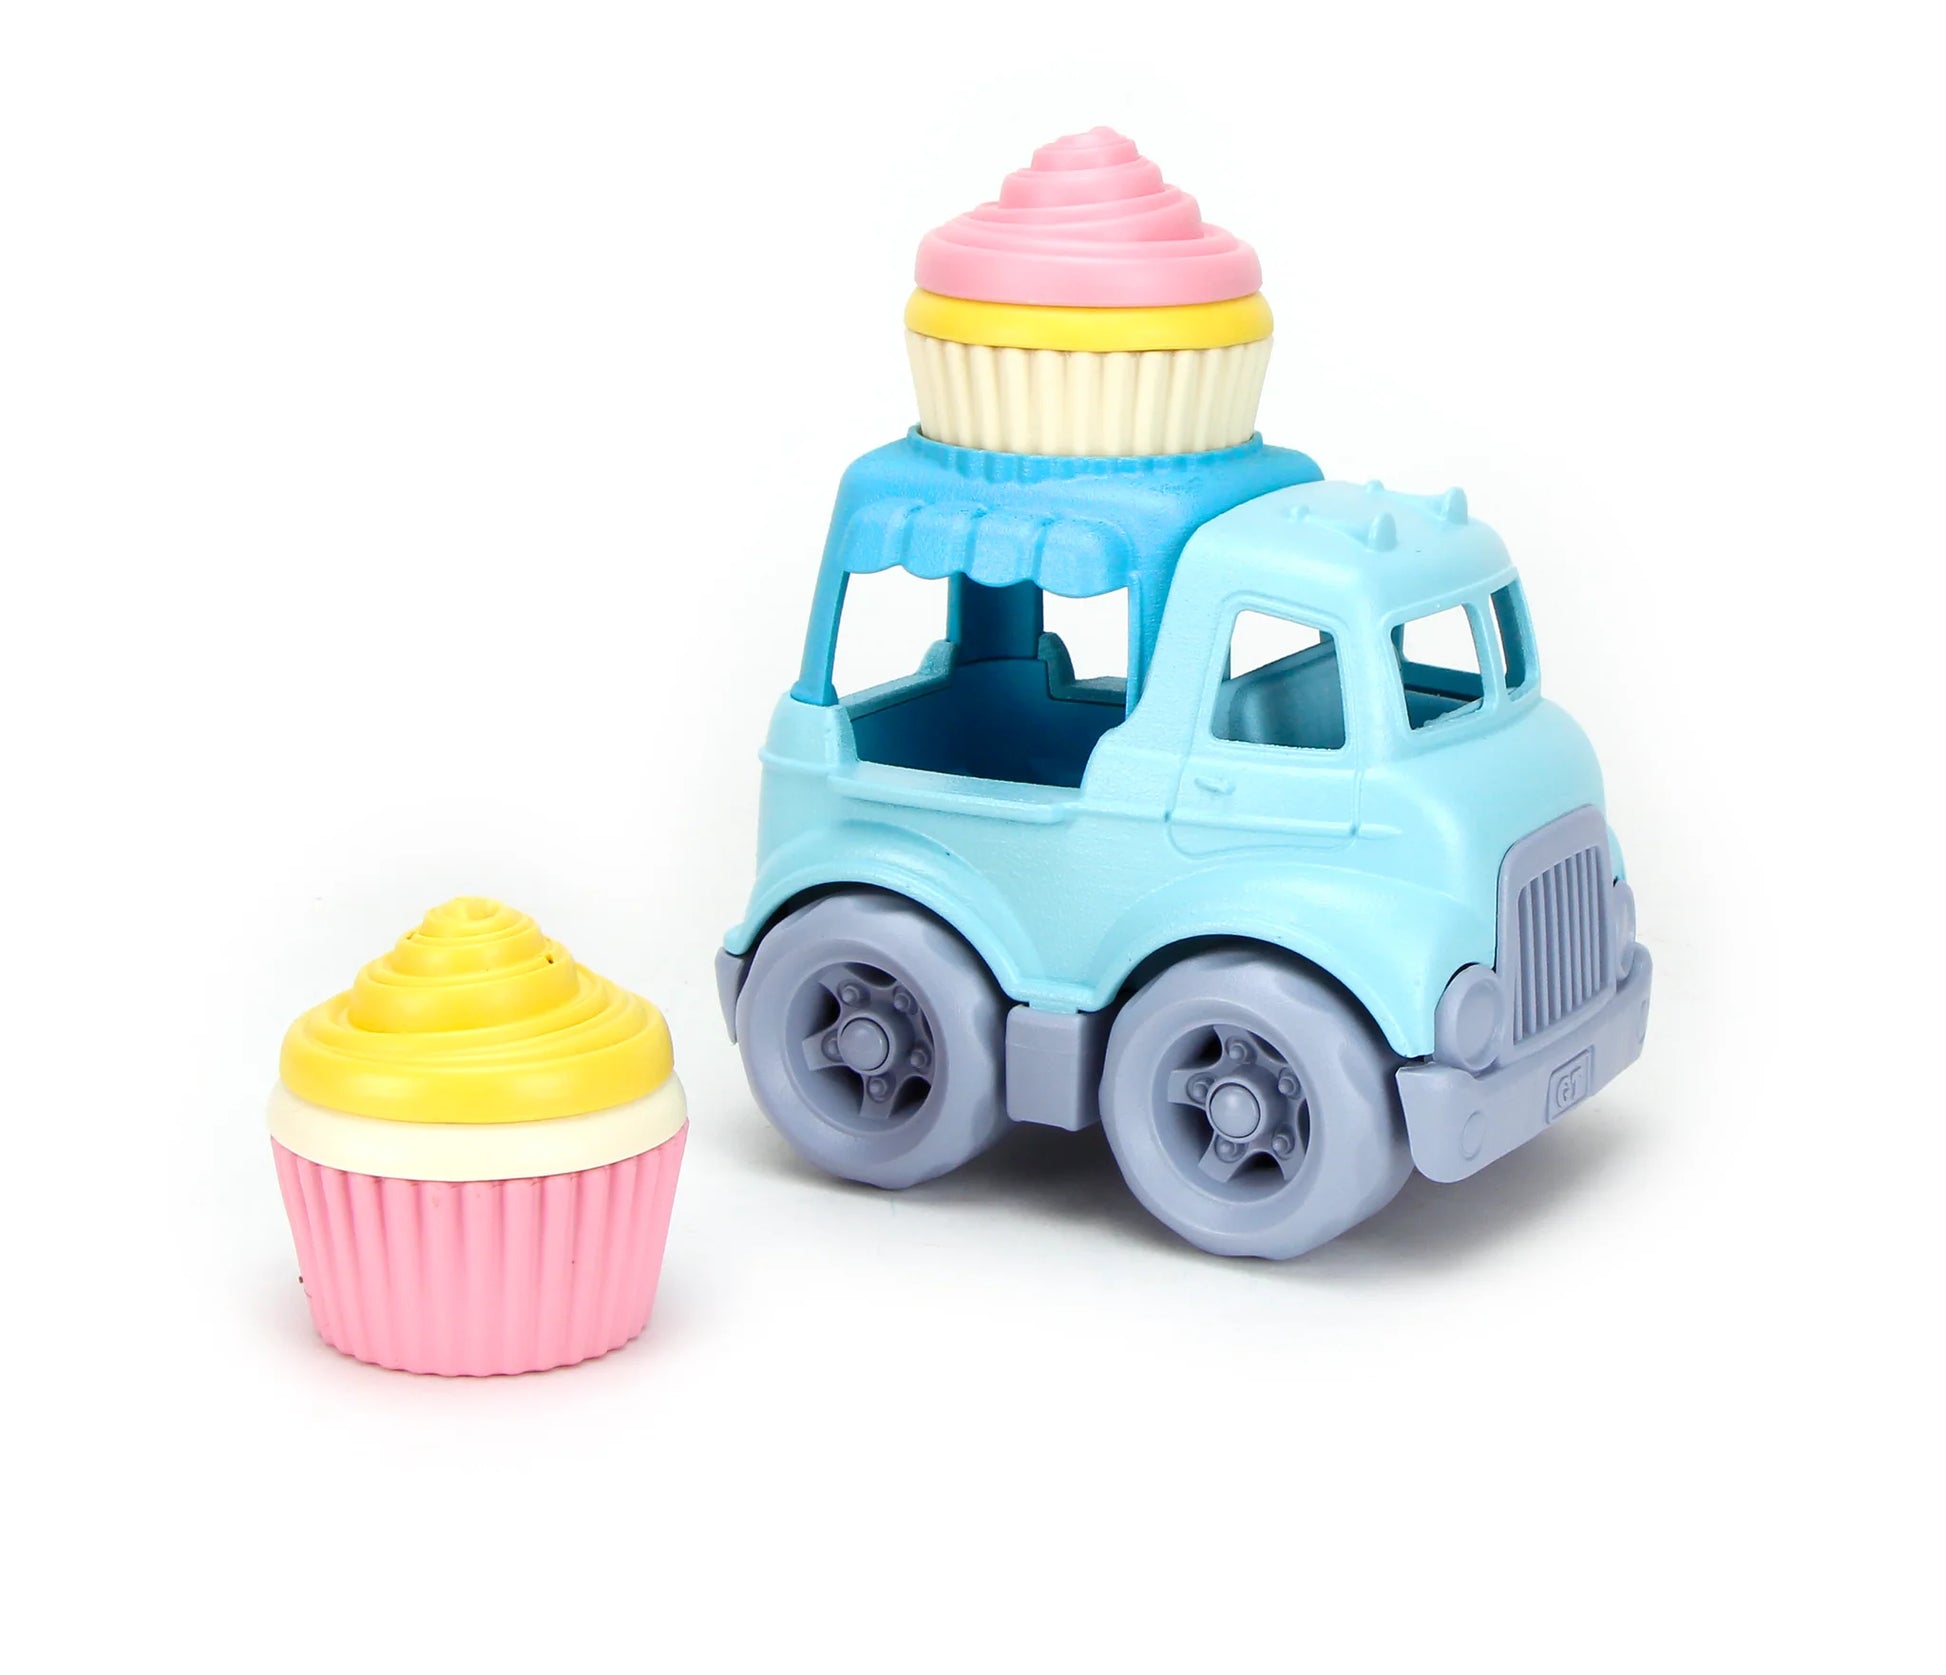 Cupcake Truck - Lulie